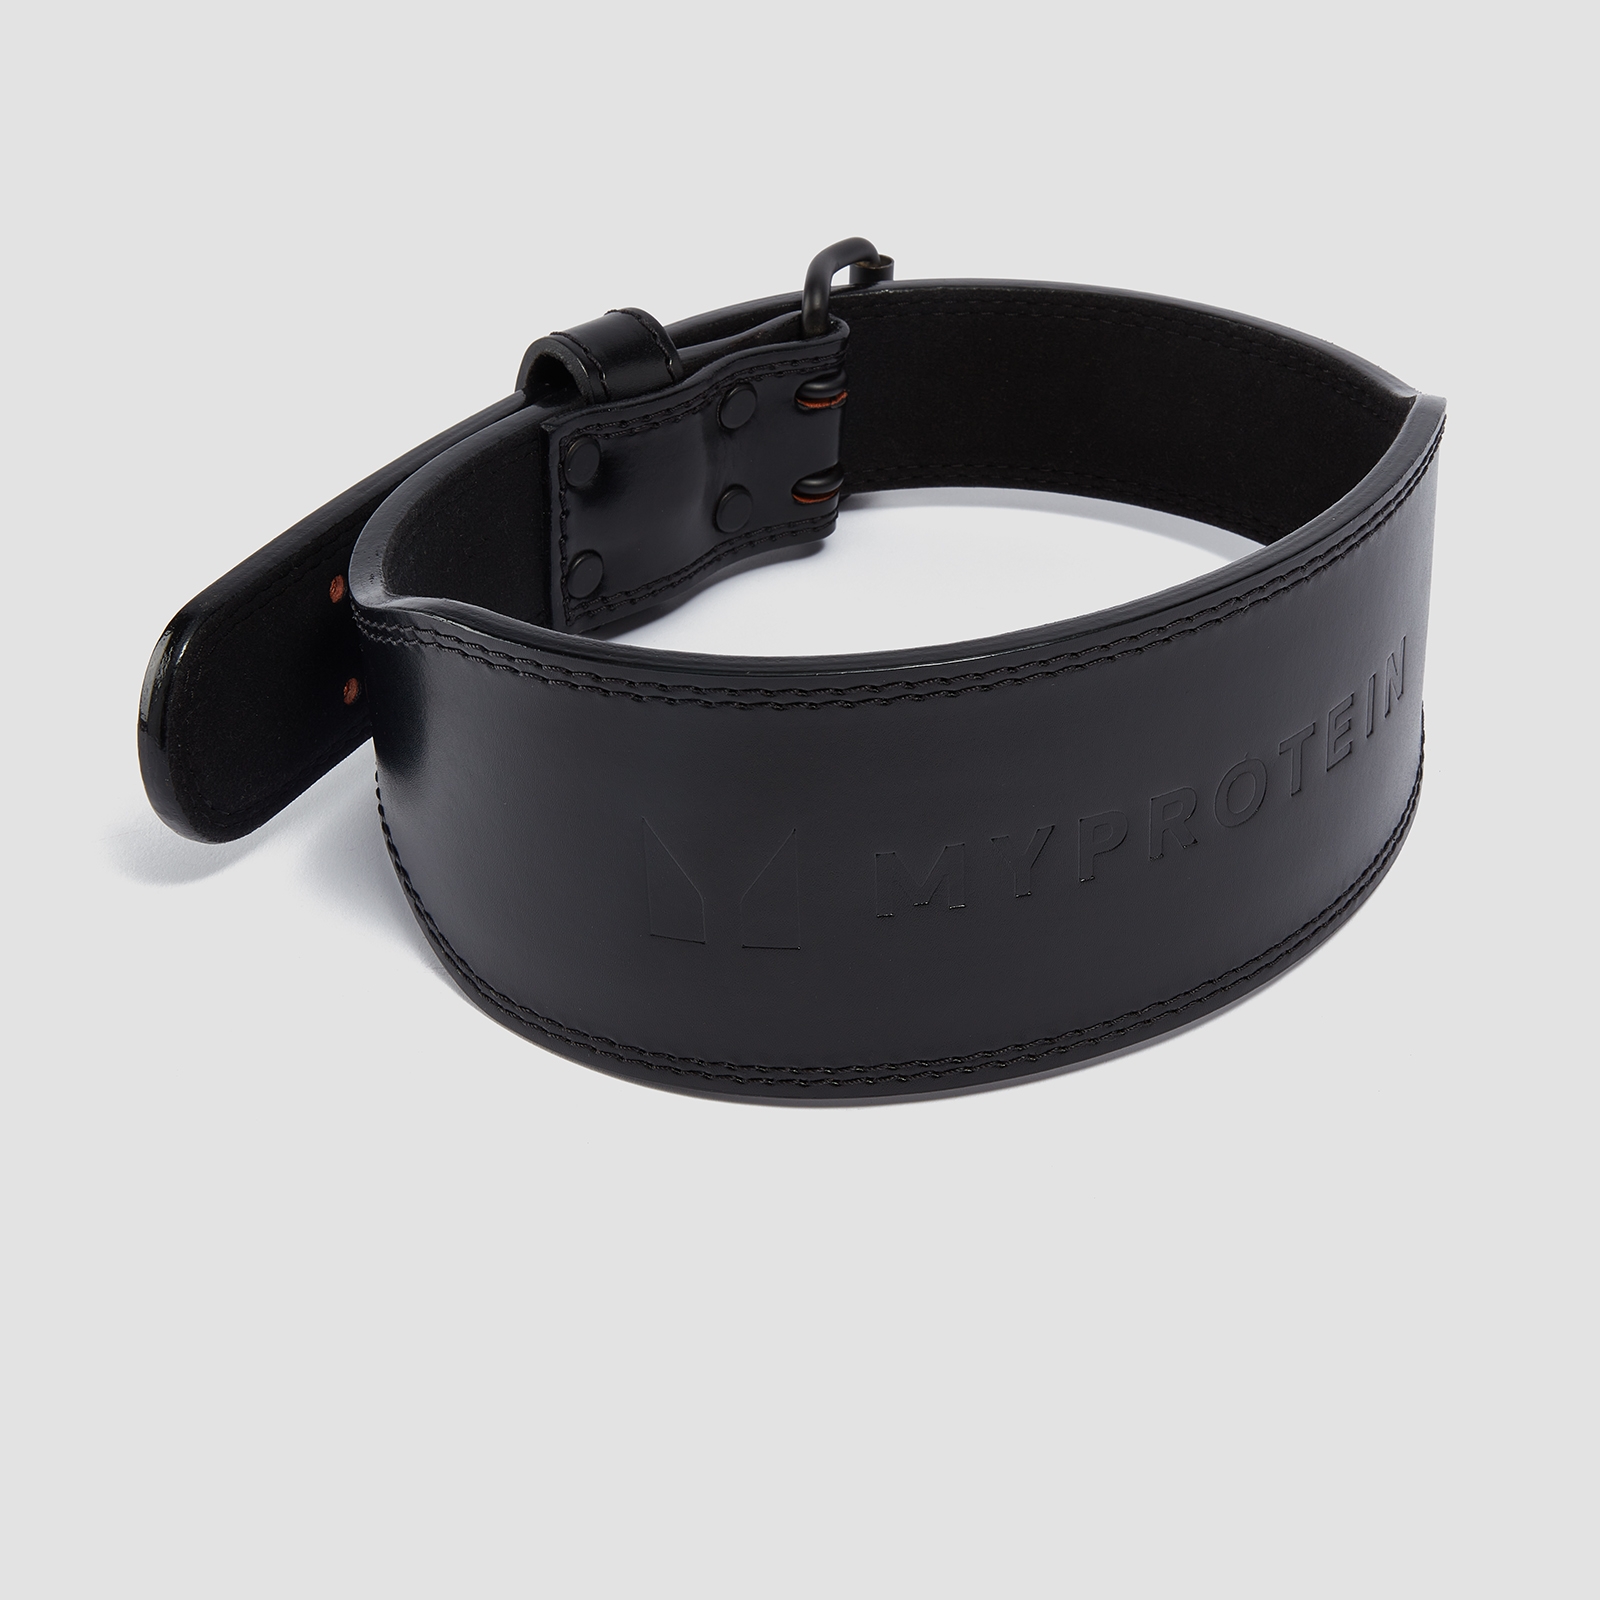 Myprotein Premium Leather Lifting Belt - Black - Medium (27-36 Inch)